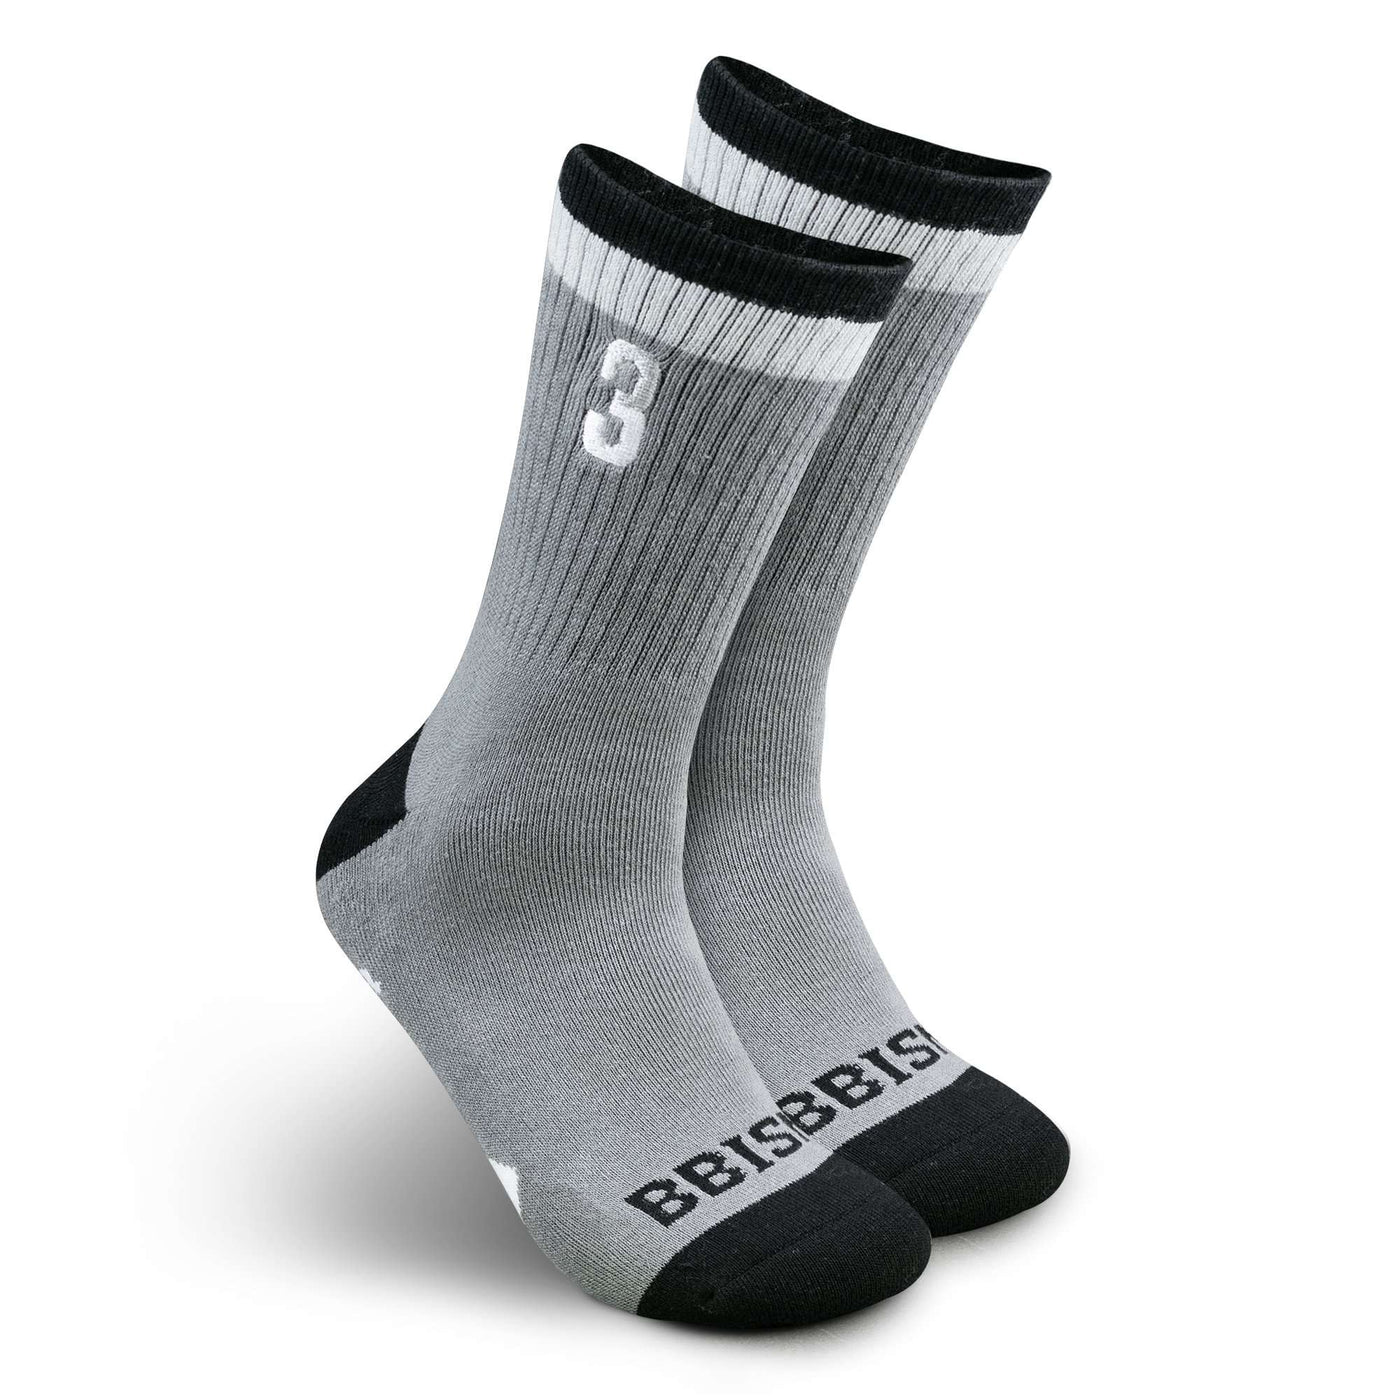 3 Up 3 Down Socks - Mid Calf 2.0